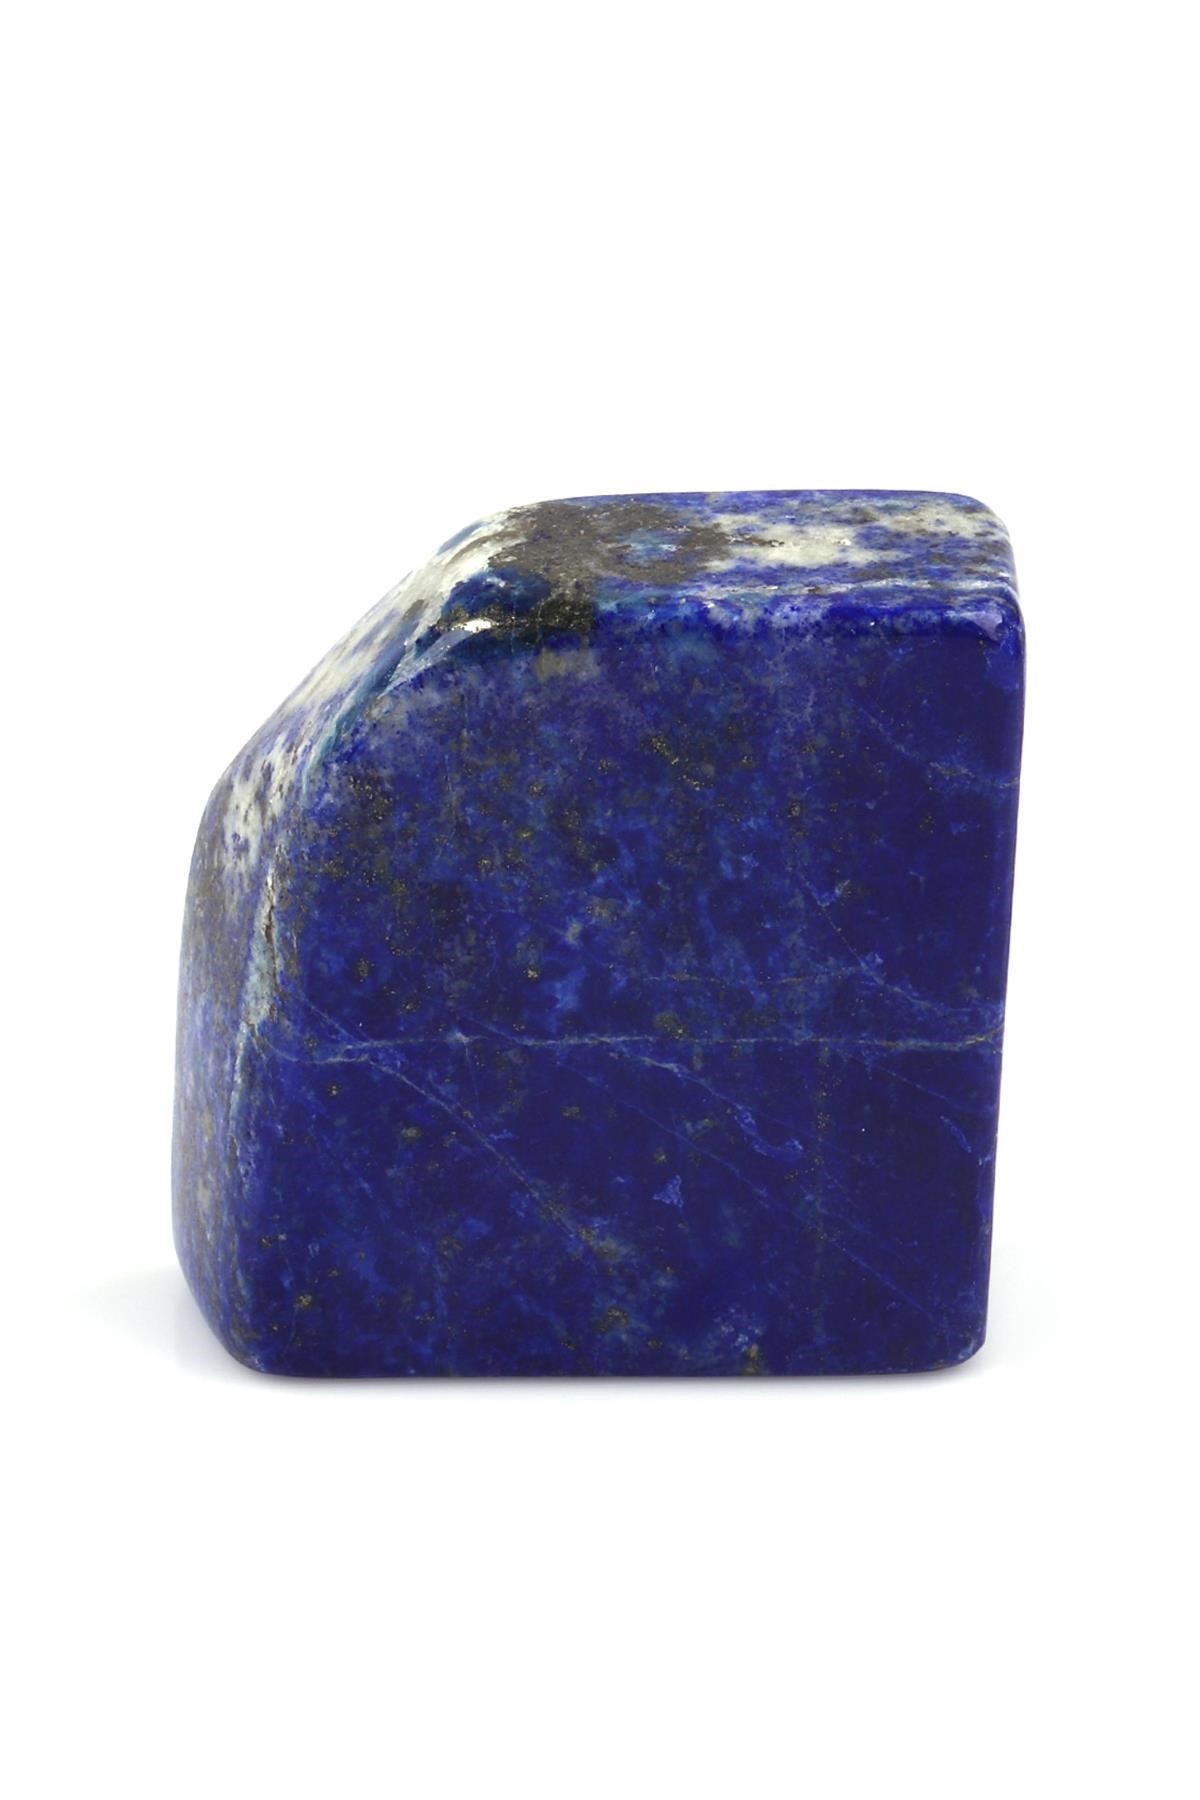 Lapis Lazuli Natural Gemstone Piece